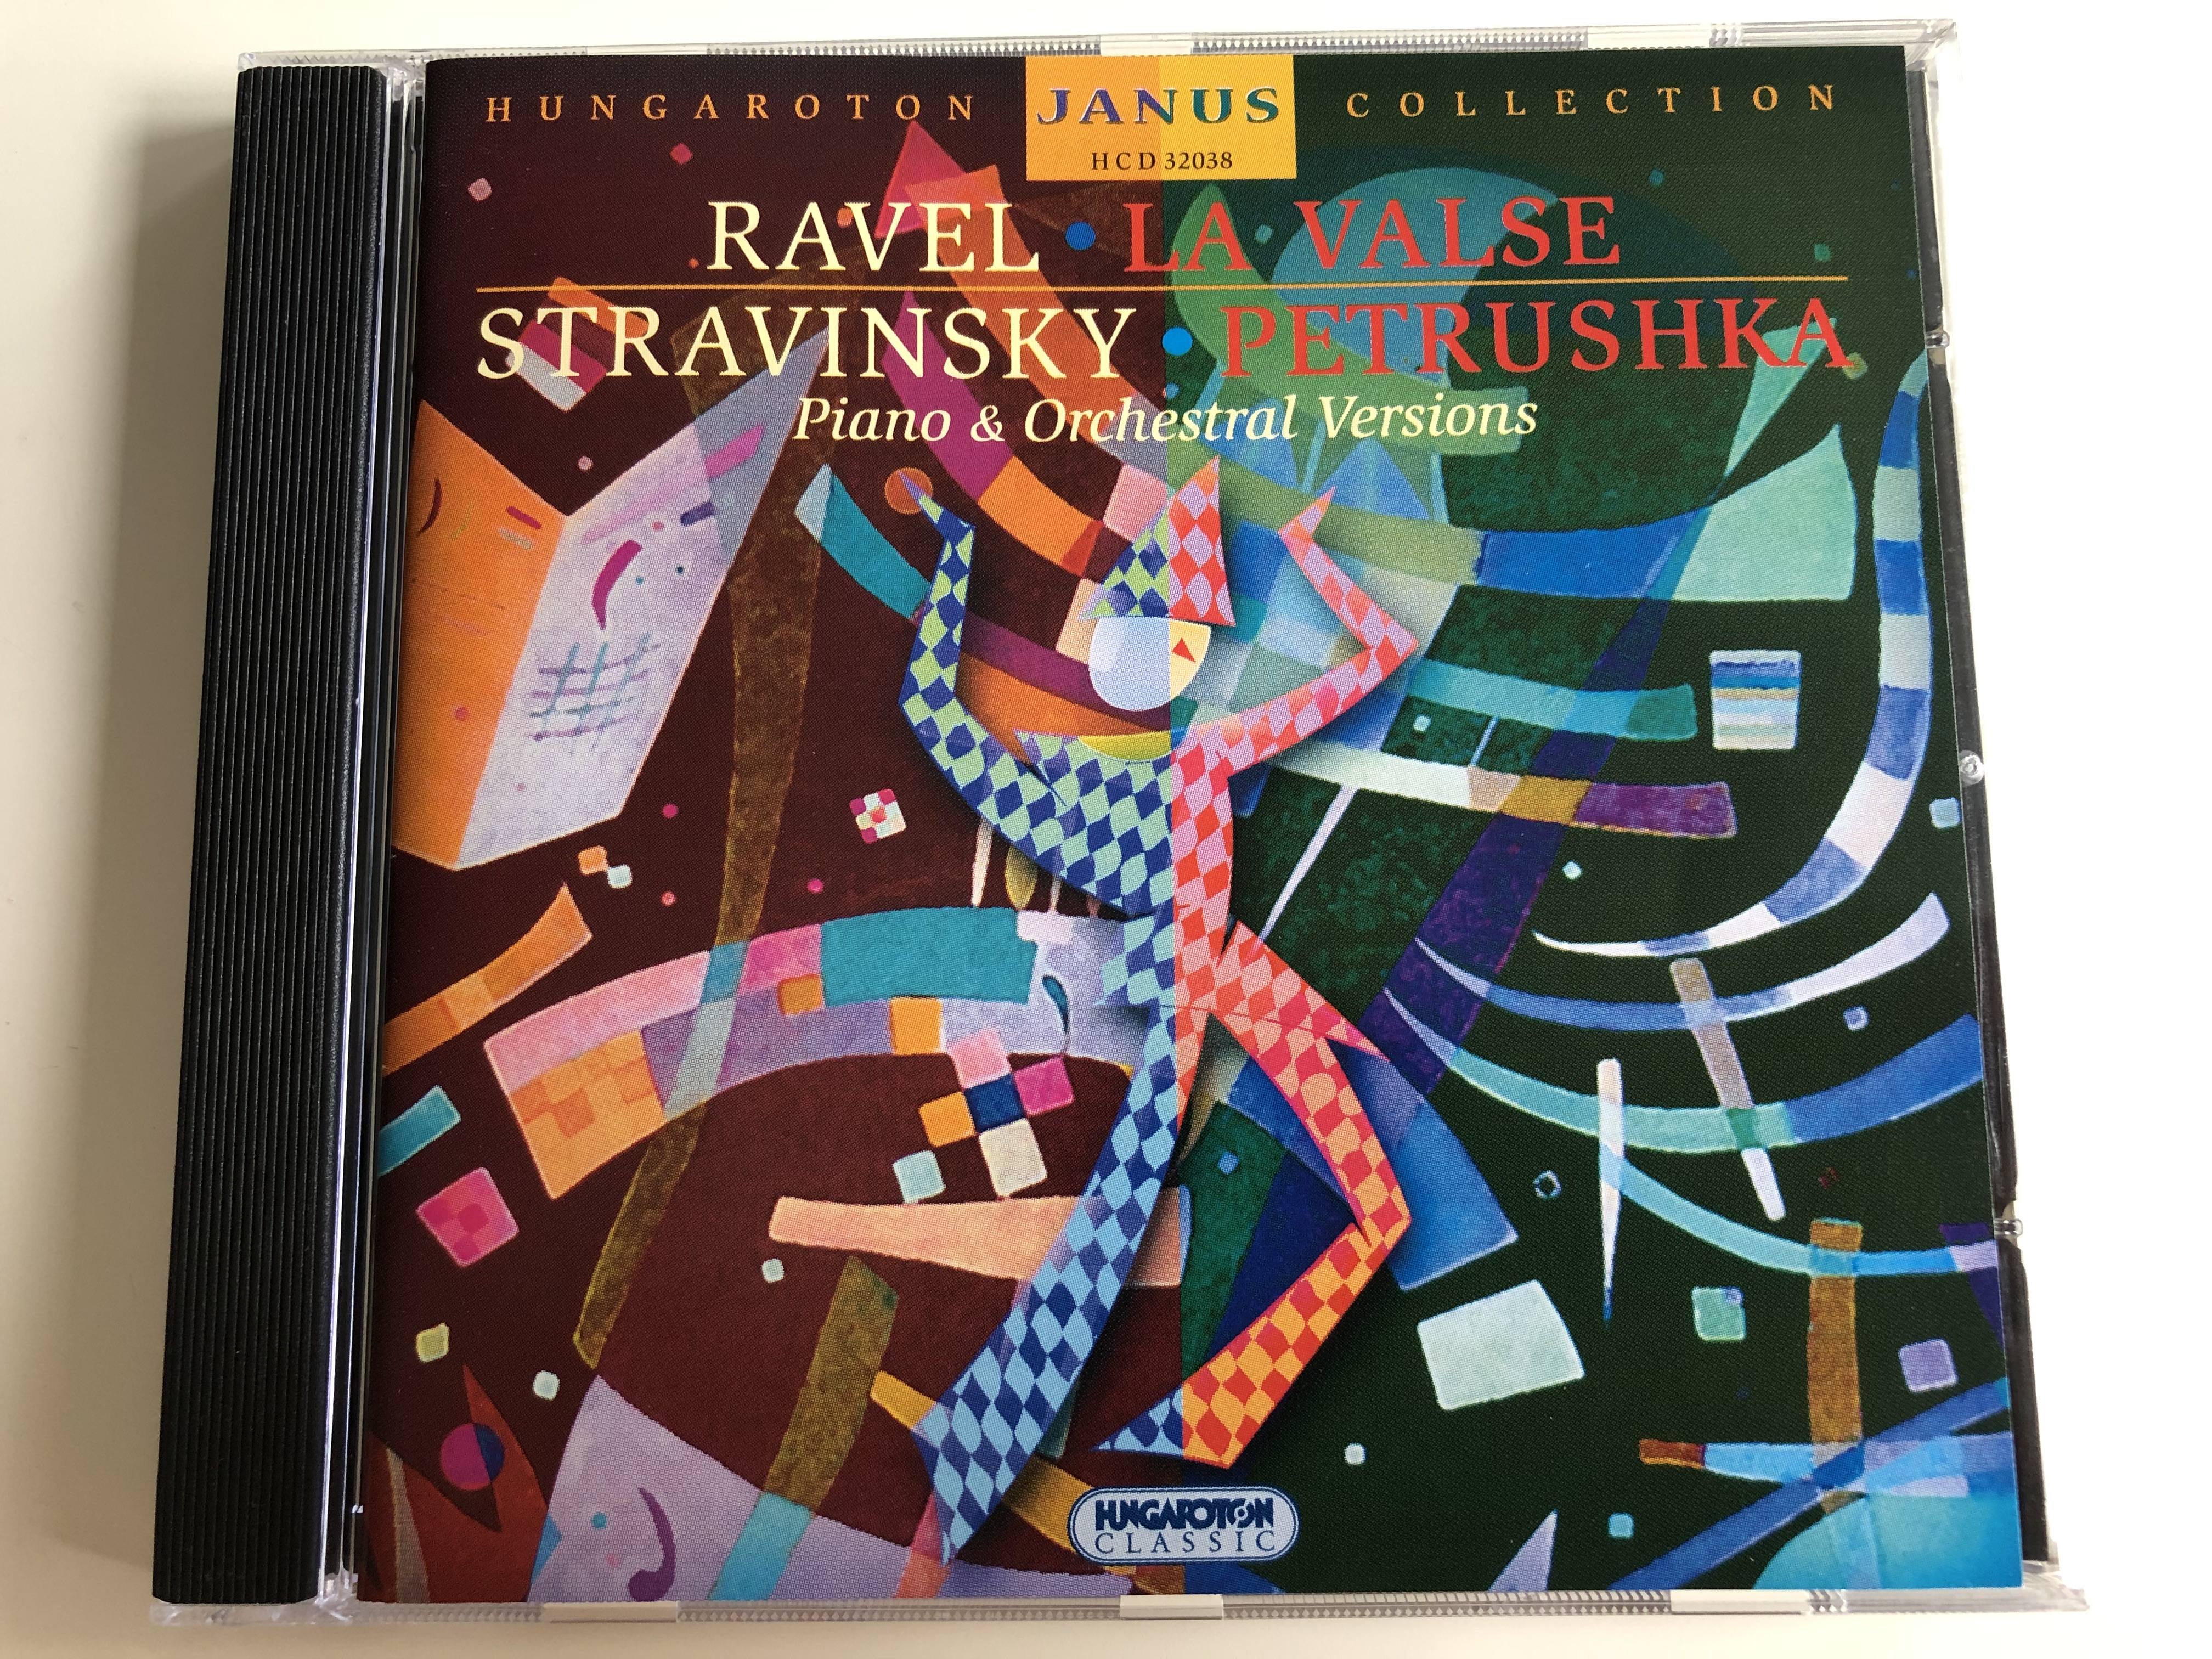 ravel-la-valse-stravinsky-petrushka-piano-orchestral-versions-hungaroton-collection-janus-series-d-m-fellegi-piano-budapest-festival-orchestra-conduted-by-iv-n-fischer-hcd-32038-1-.jpg